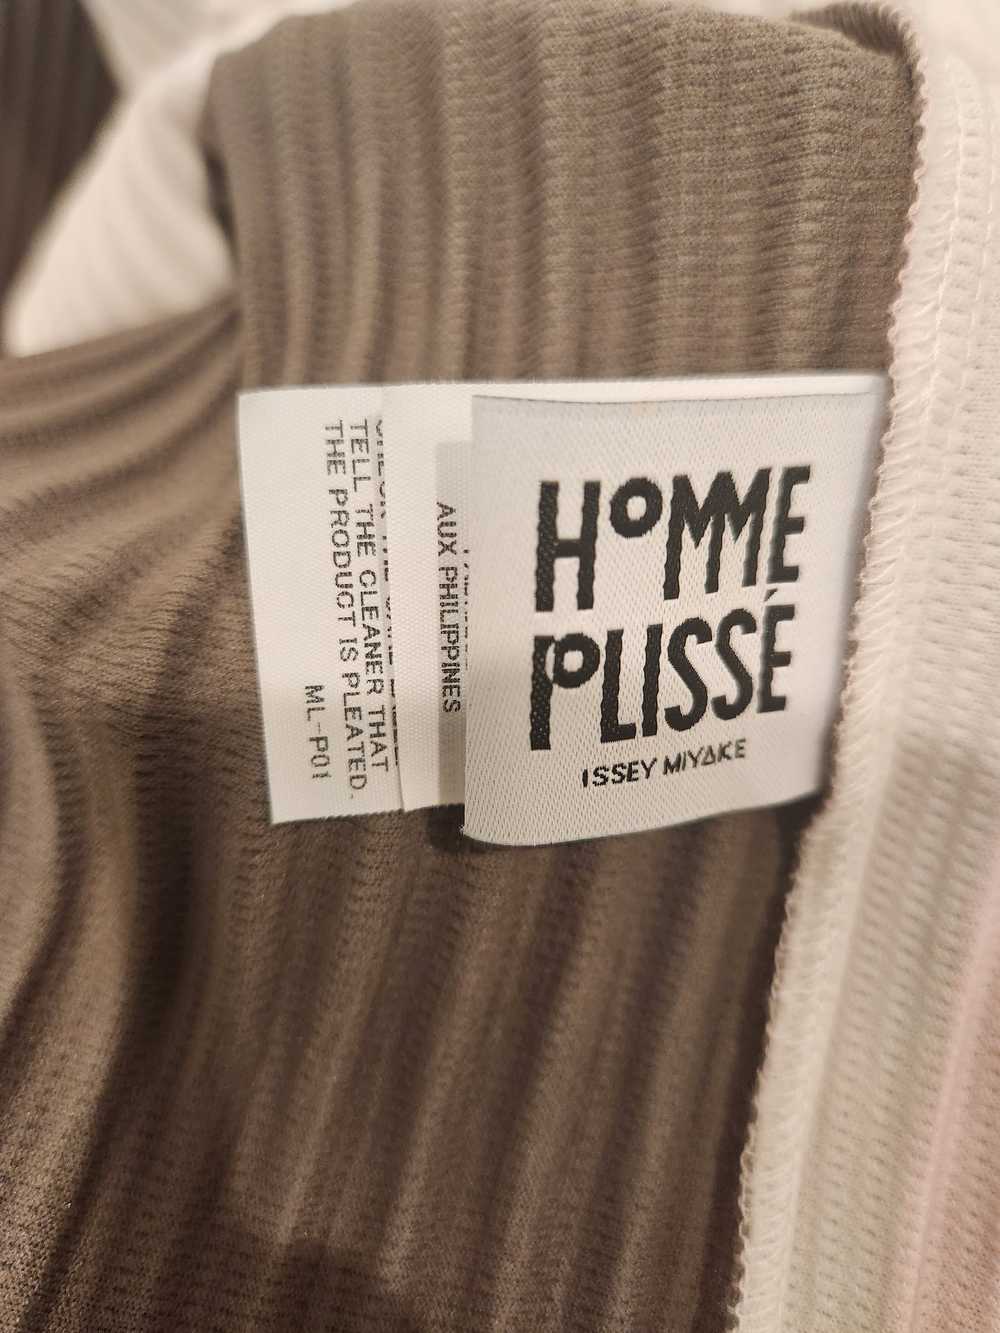 Homme Plisse Issey Miyake Quad Block knitted shirt - image 4